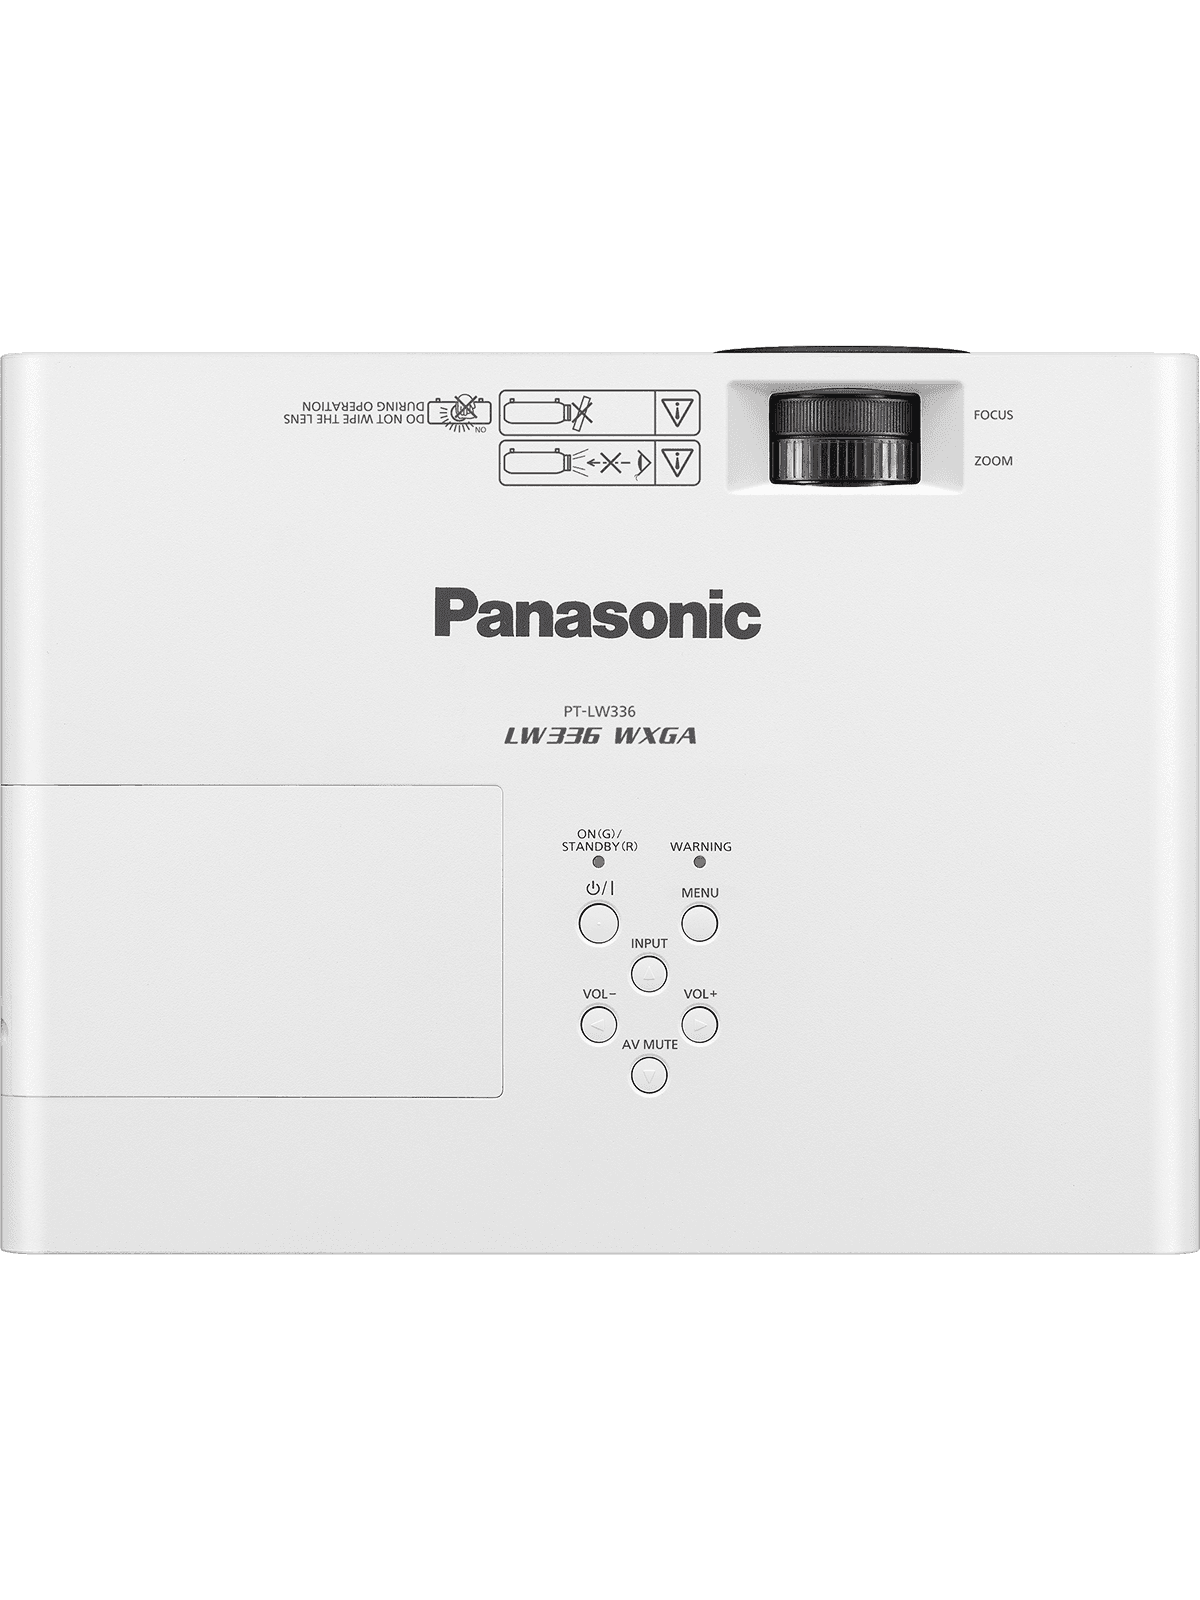 Panasonic - PT-LW336 3100 Lm WXGA